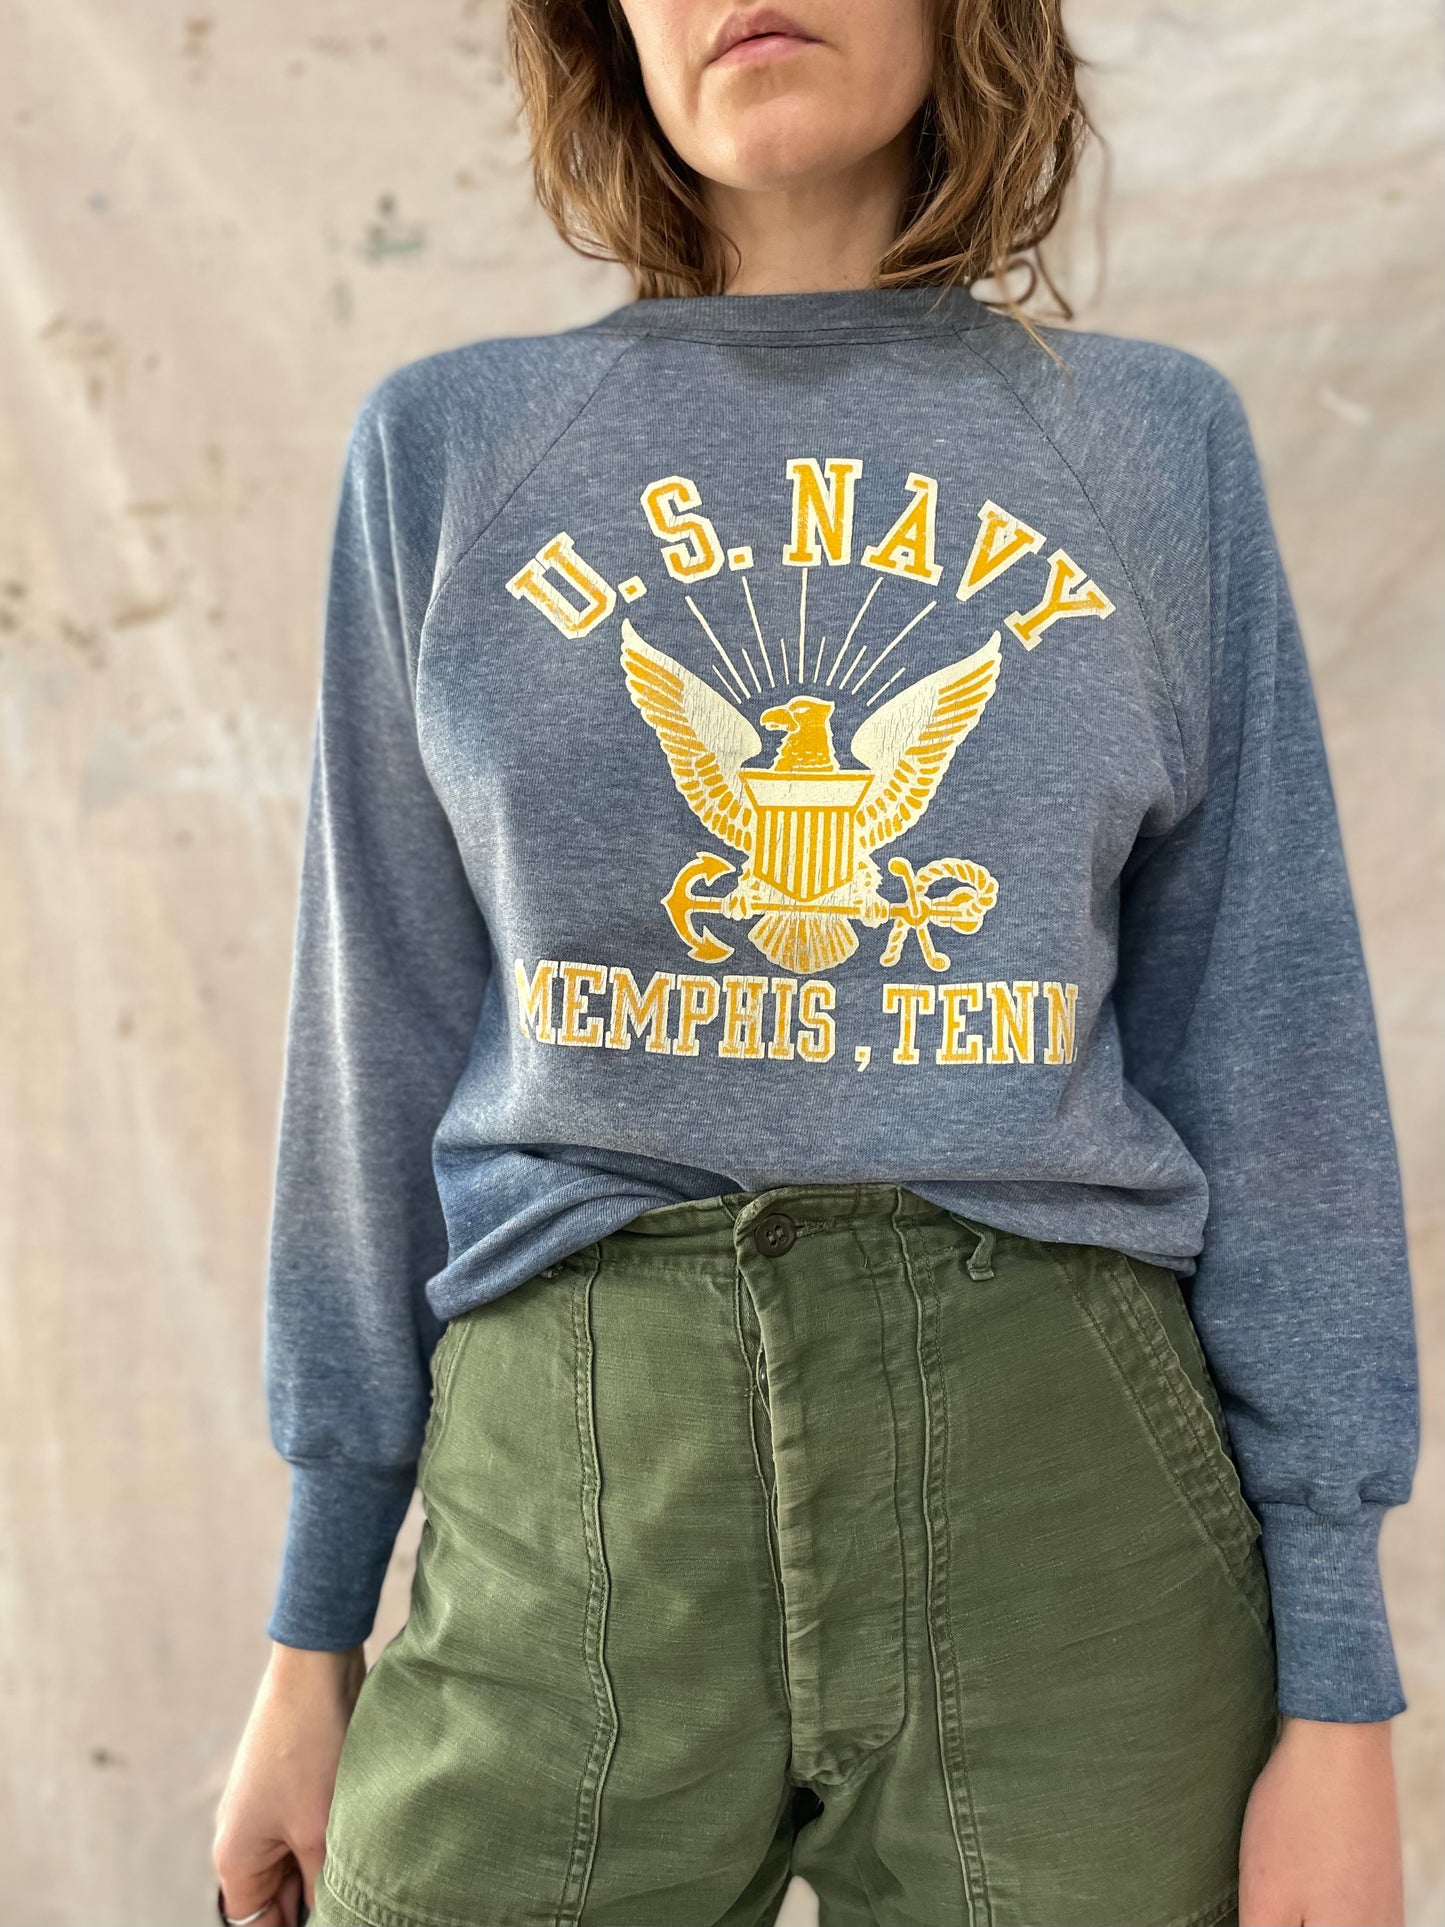 70s/80s US Navy Memphis, Tenn. Sweatshirt